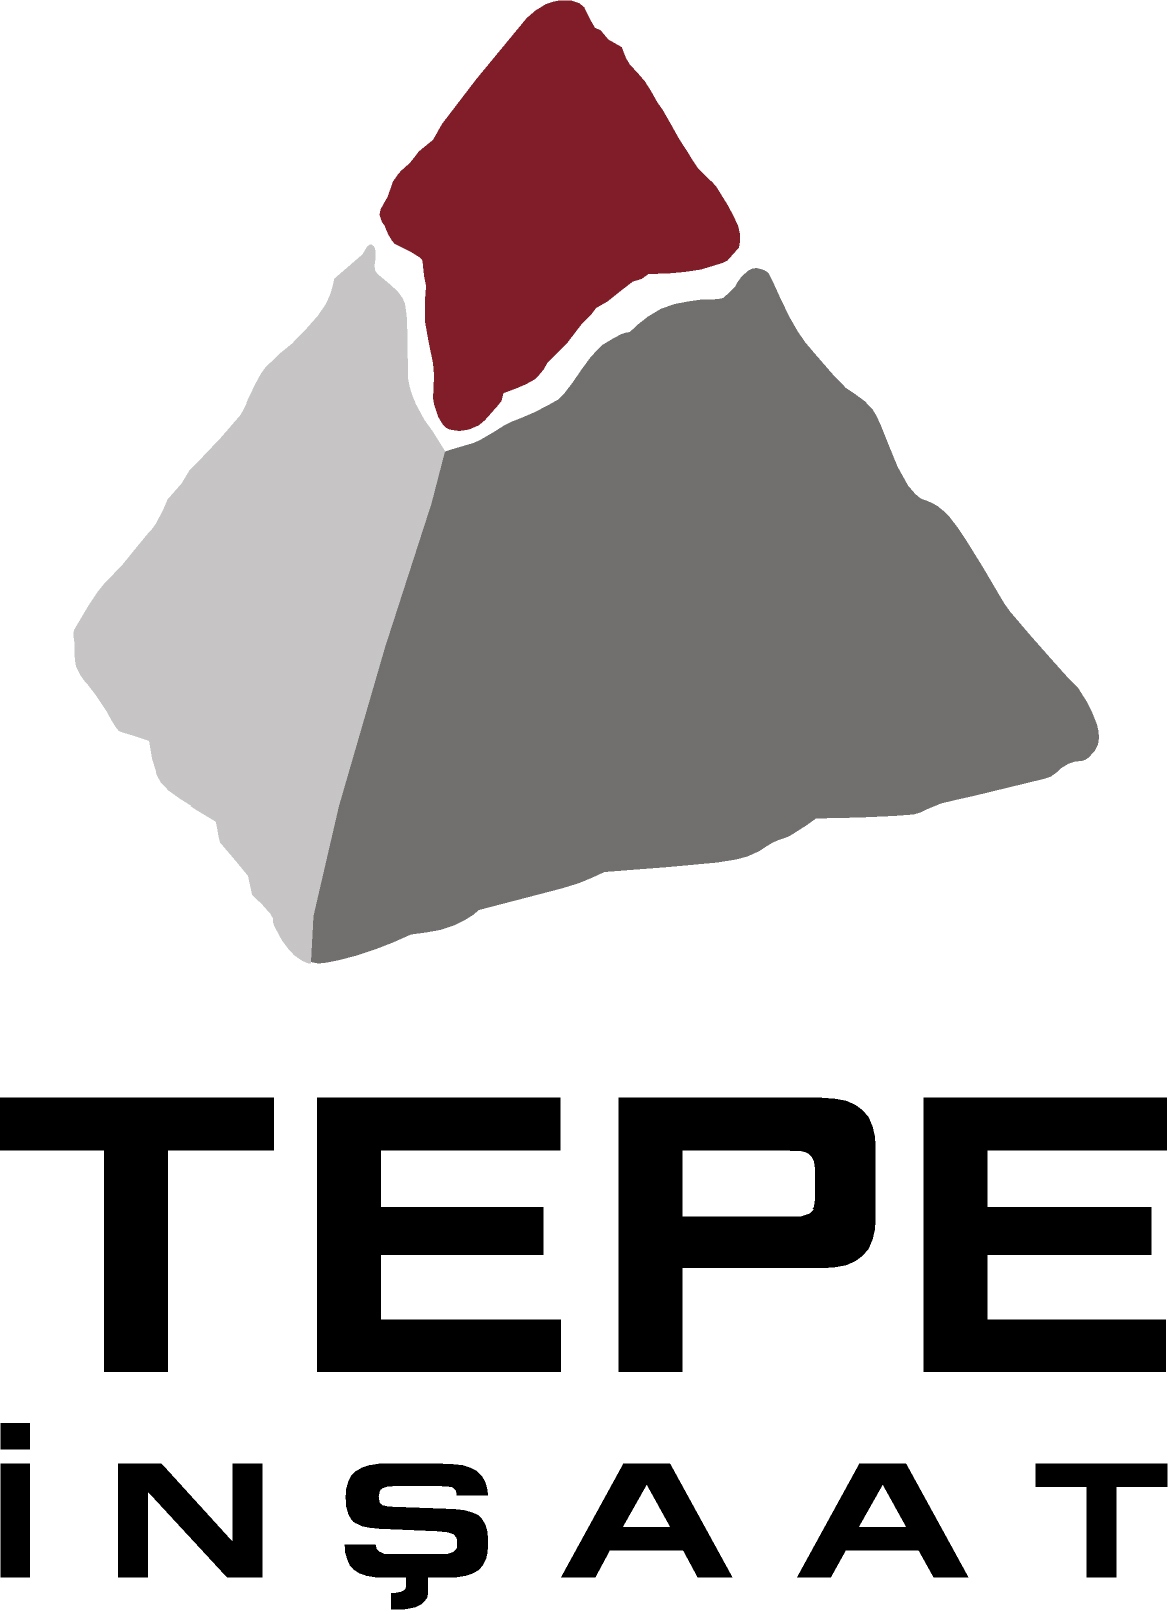 Tepe İnşaat Logo